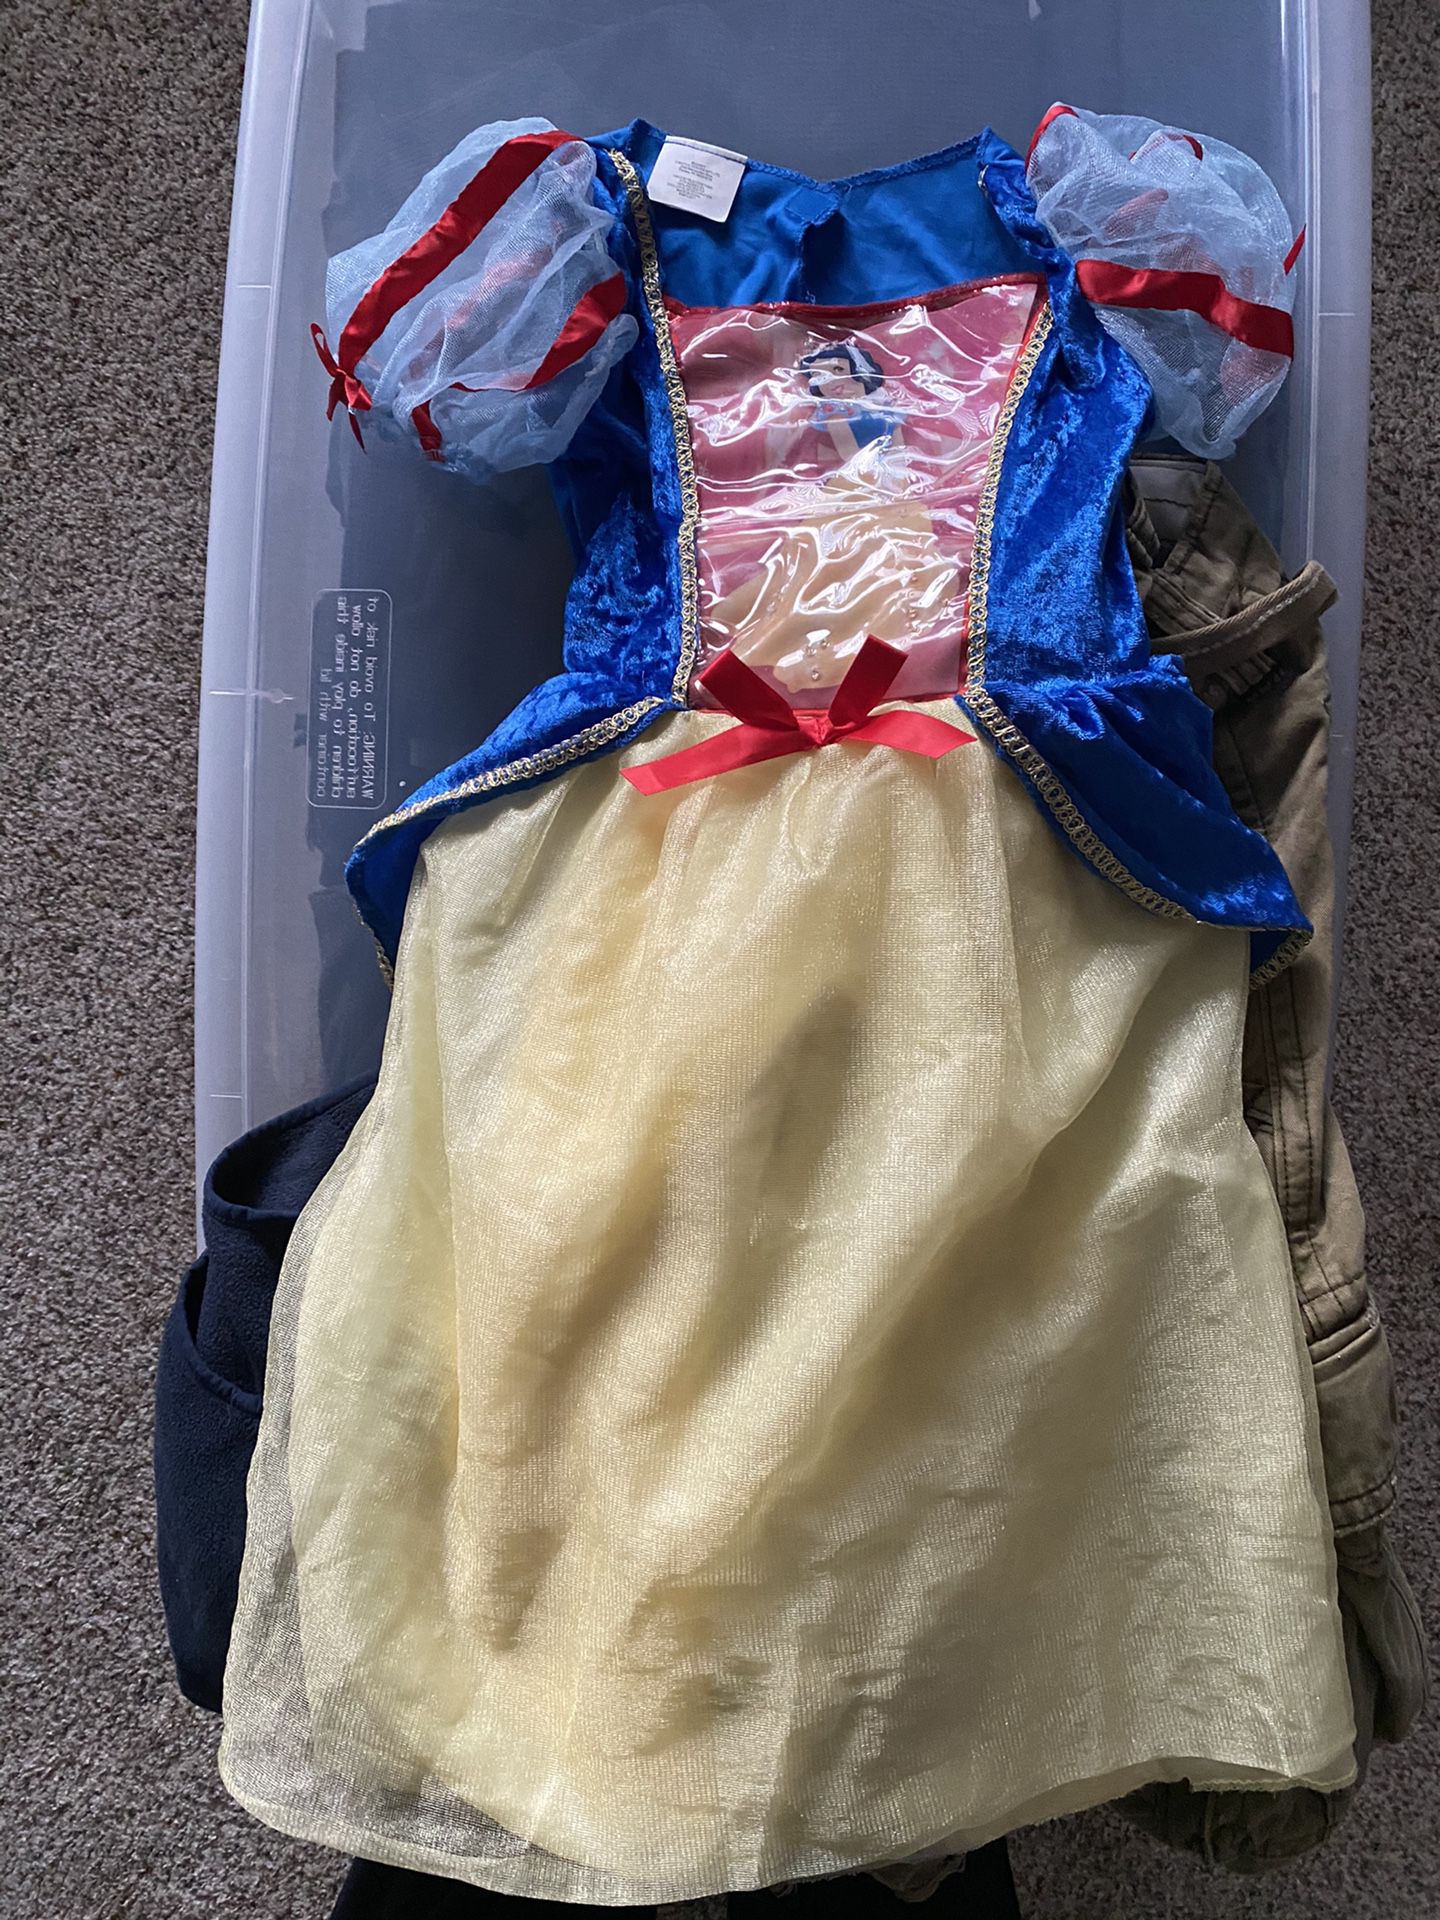 Snow White costume 4-5t kid